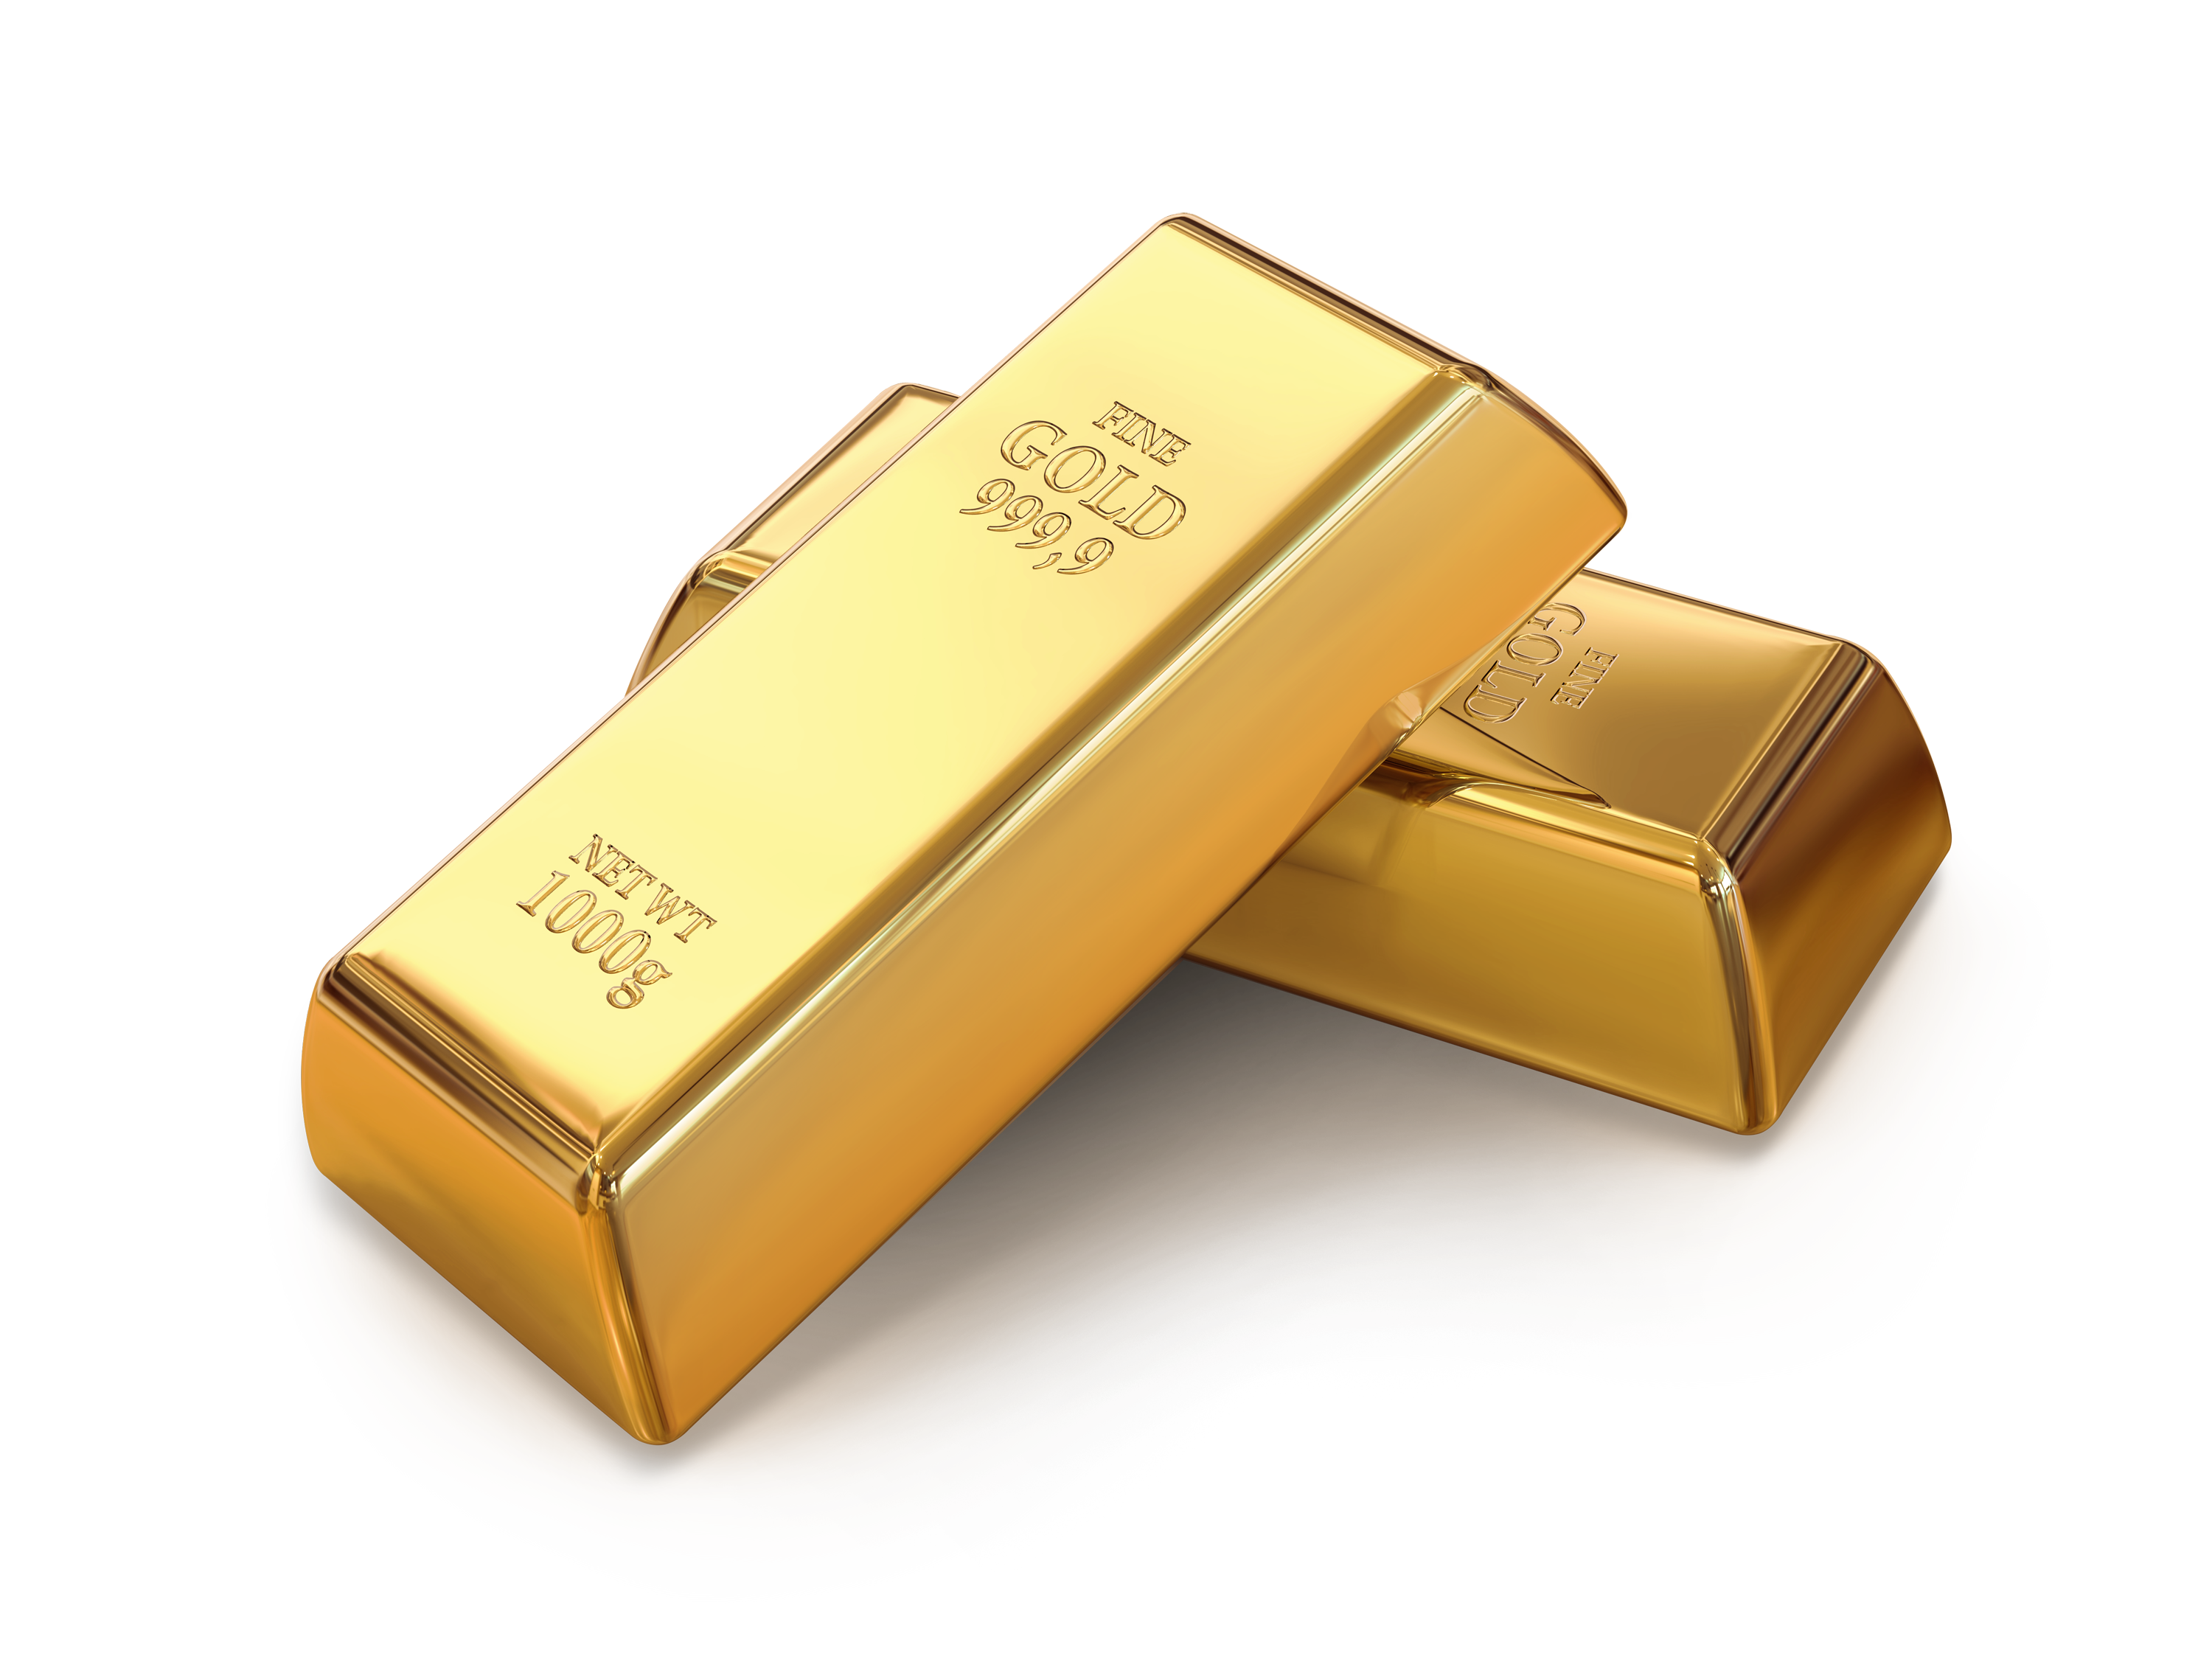 Gold Bars Png image #41017